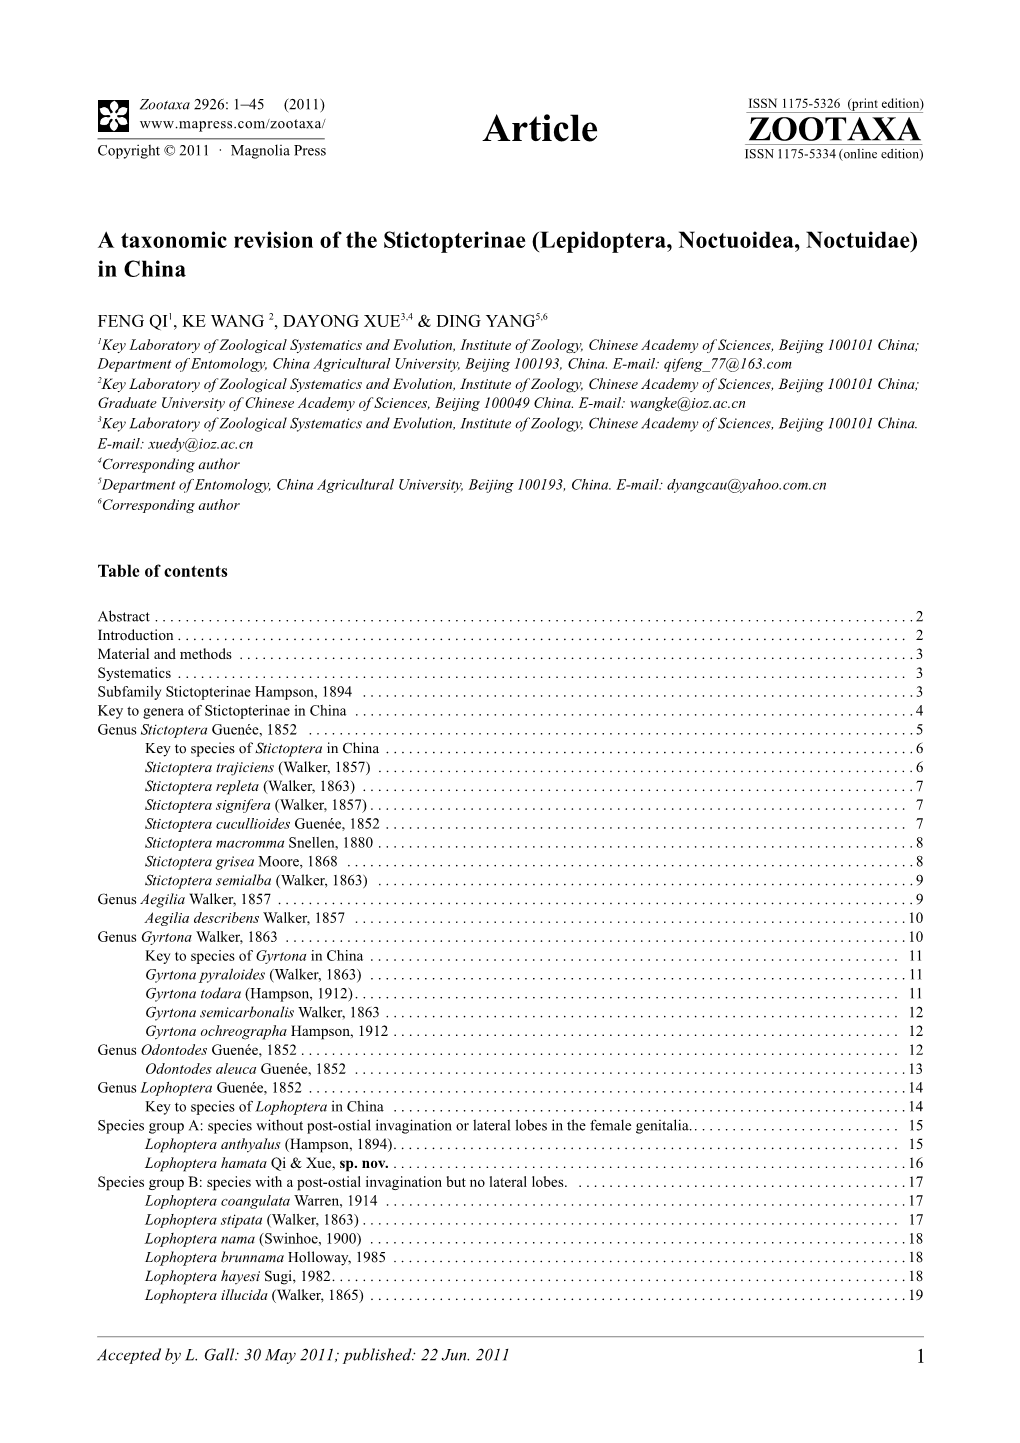 A Taxonomic Revision of the Stictopterinae (Lepidoptera, Noctuoidea, Noctuidae) in China